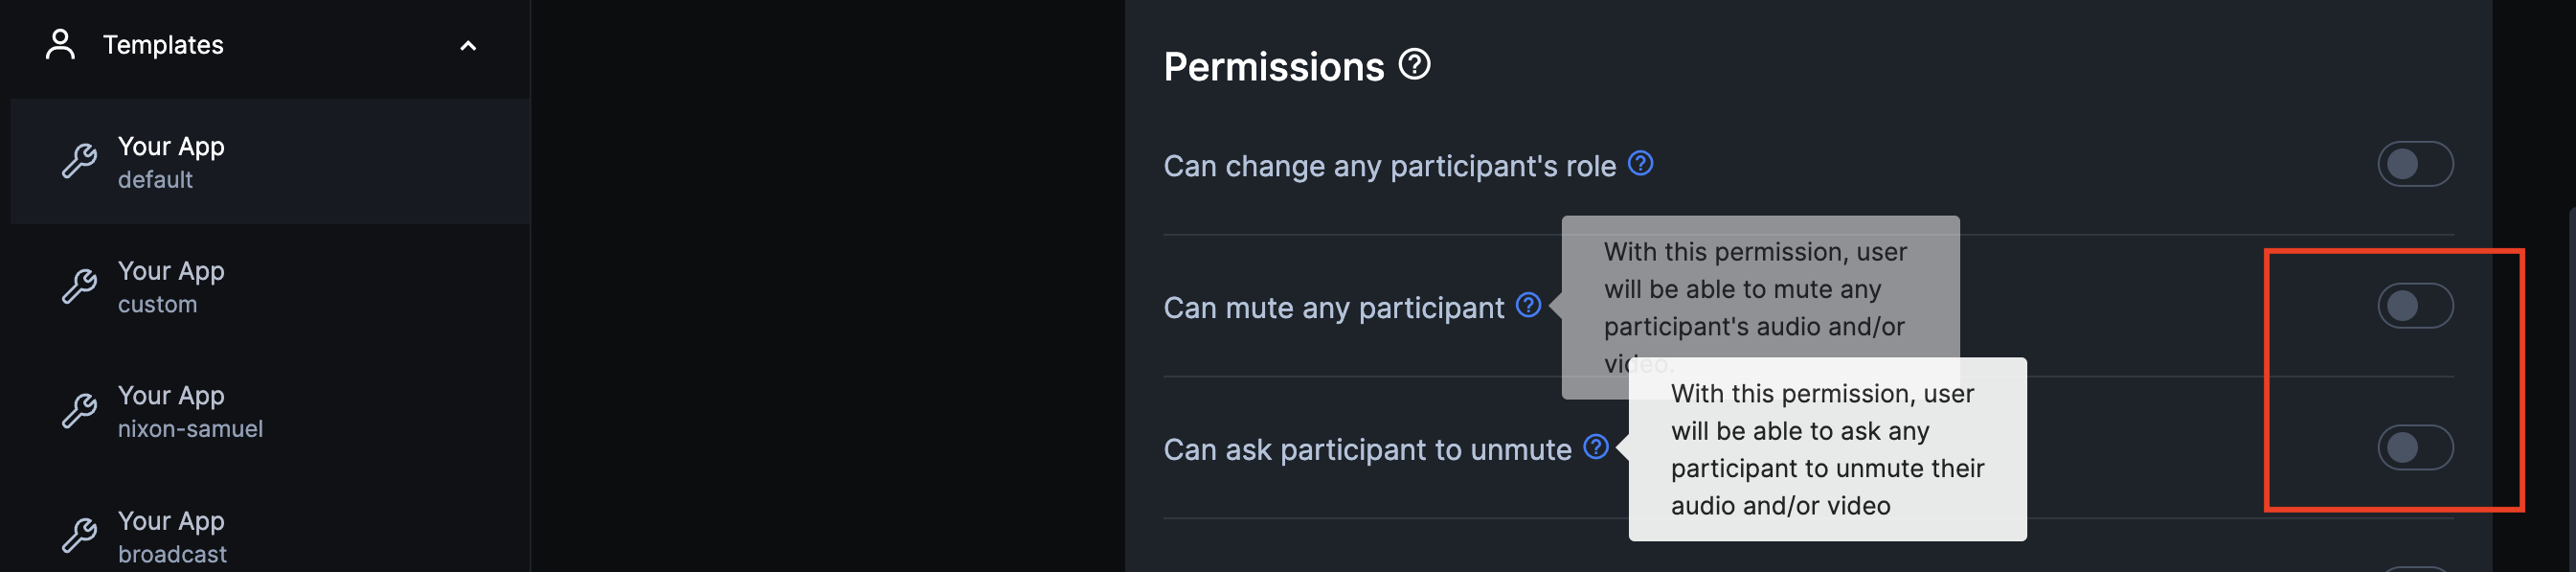 Permissions - Remote mute/unmute